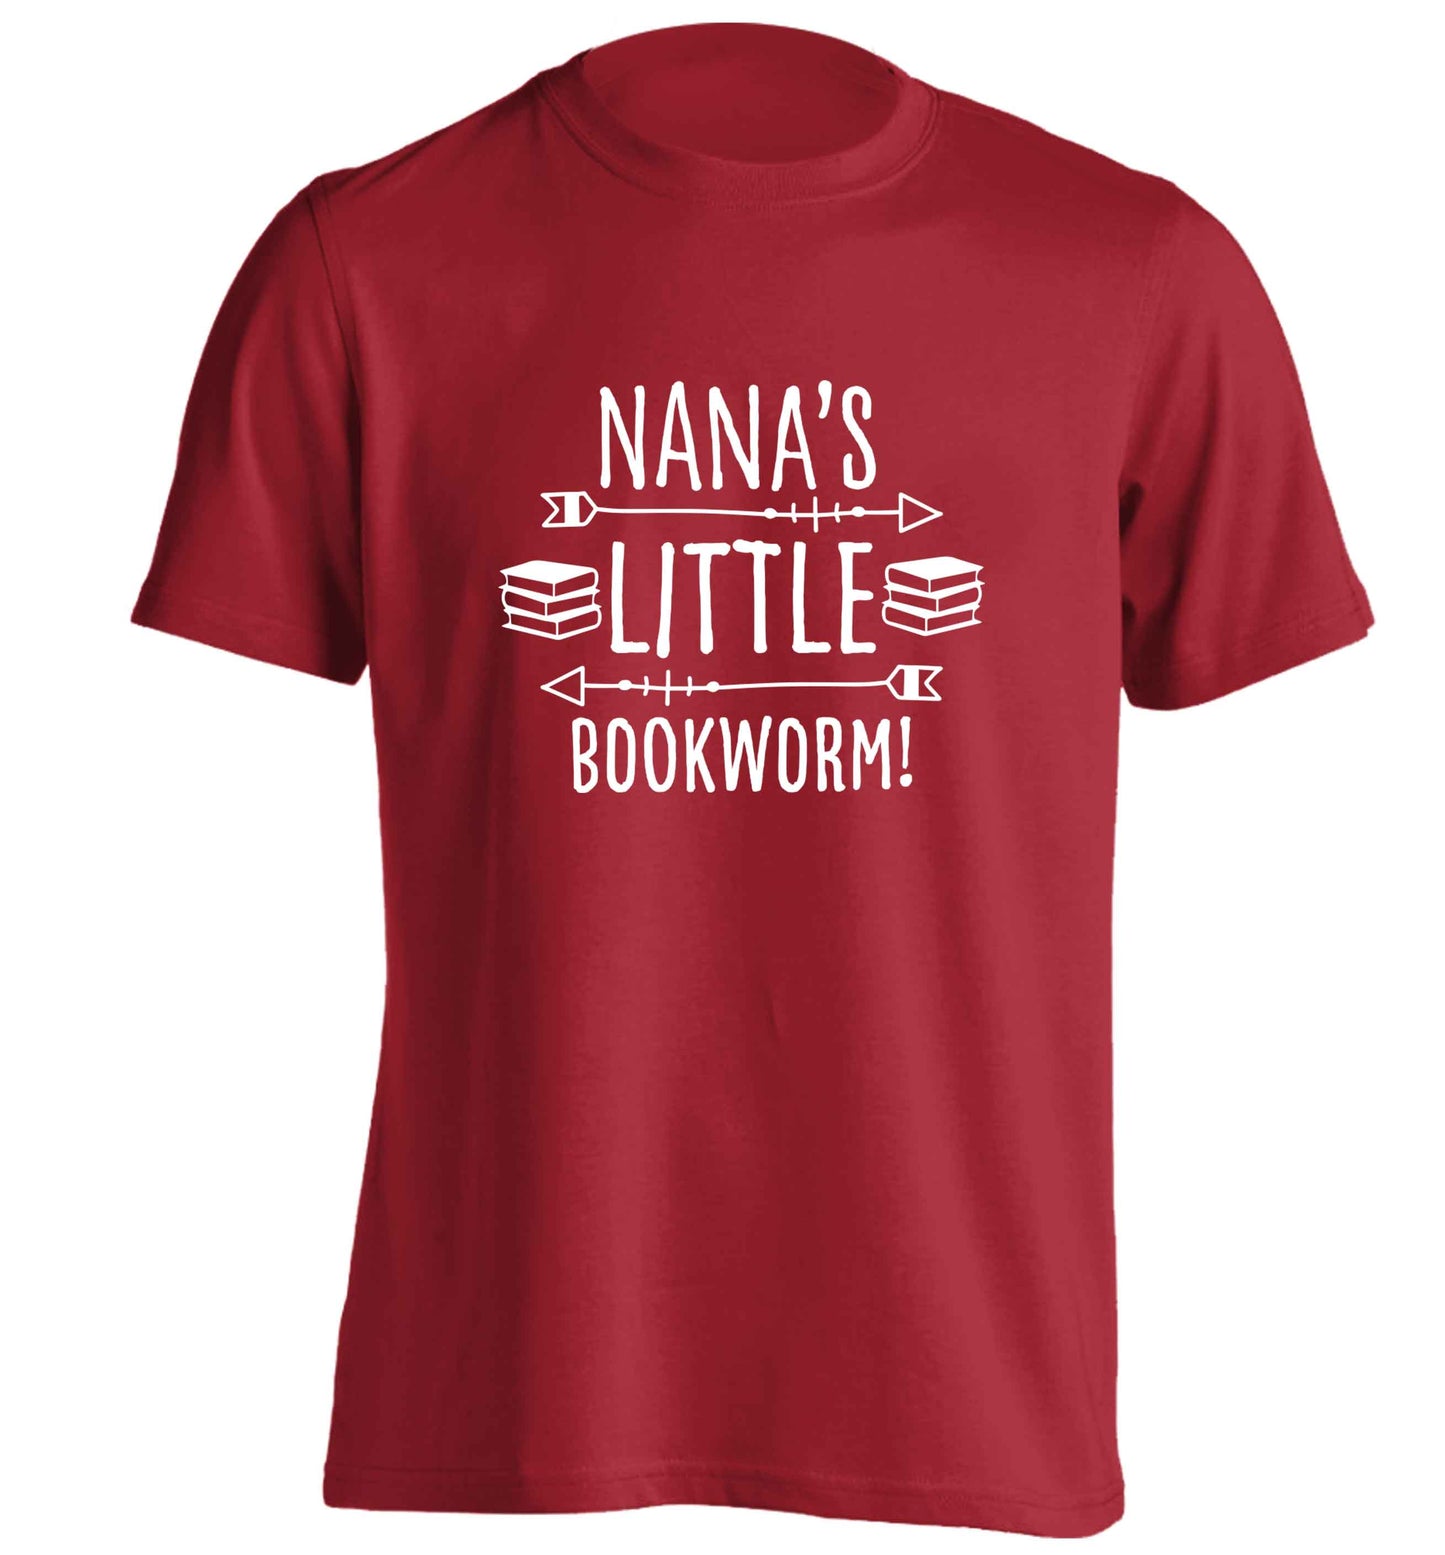 Nana's little bookworm adults unisex red Tshirt 2XL